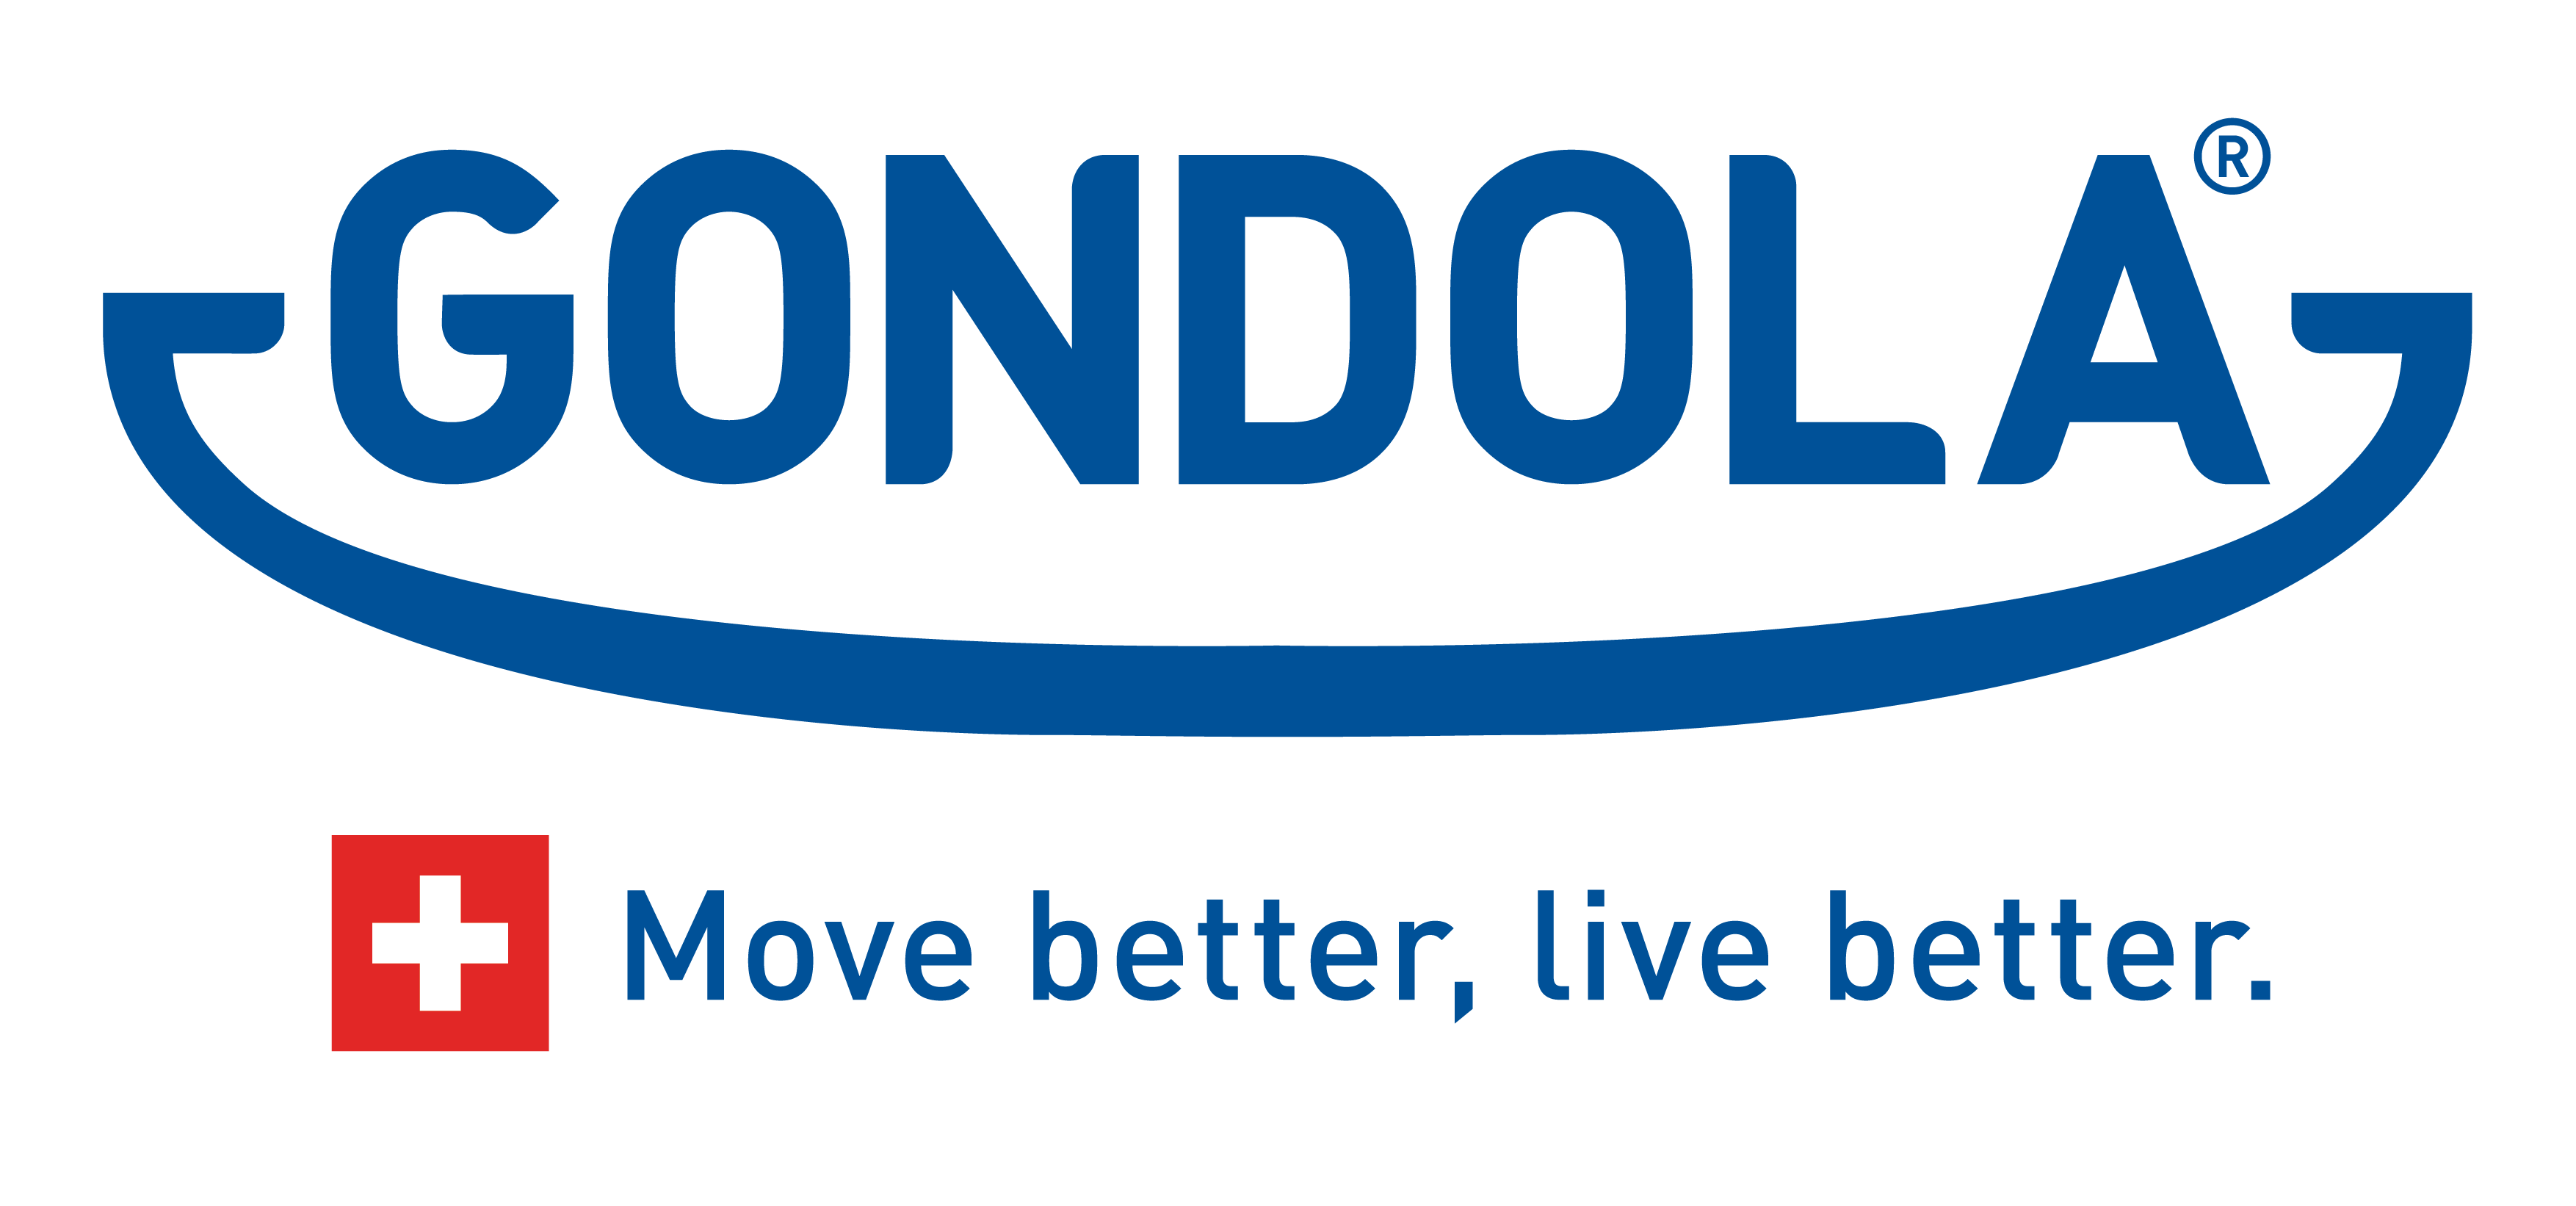 Gondola Medical Technologies SA